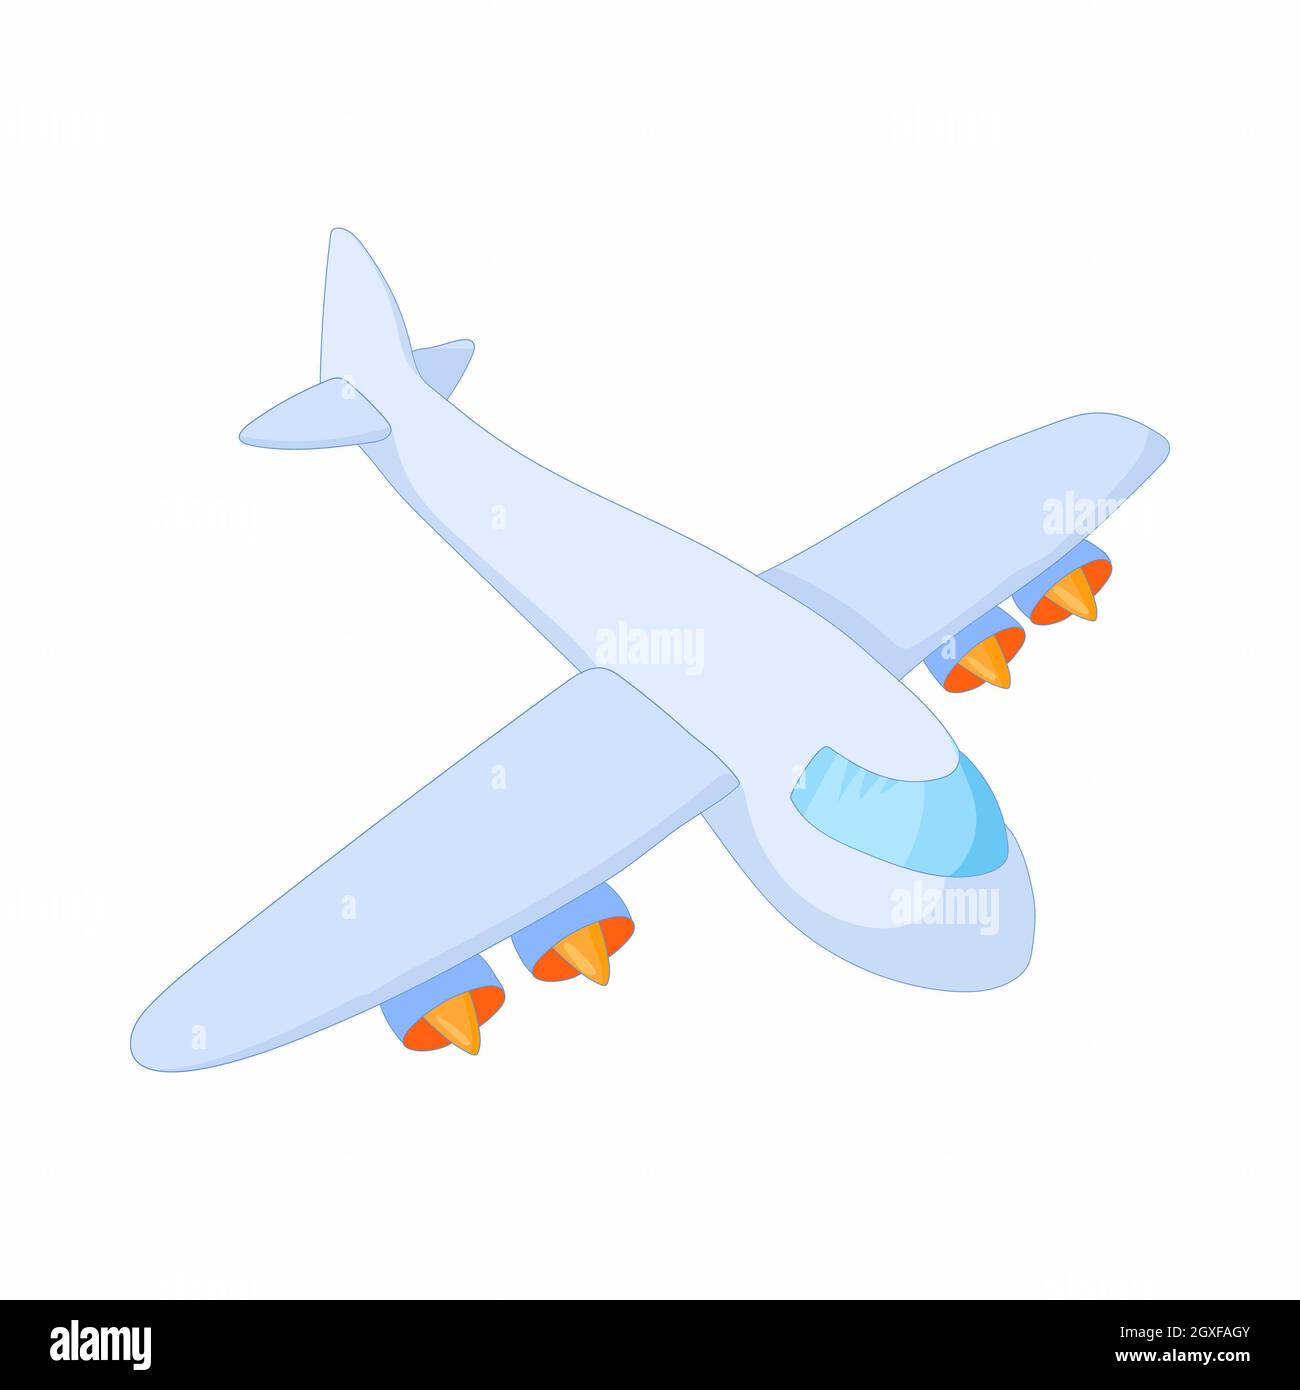 Cargo plane icon in cartoon style on a white background Stock Photo